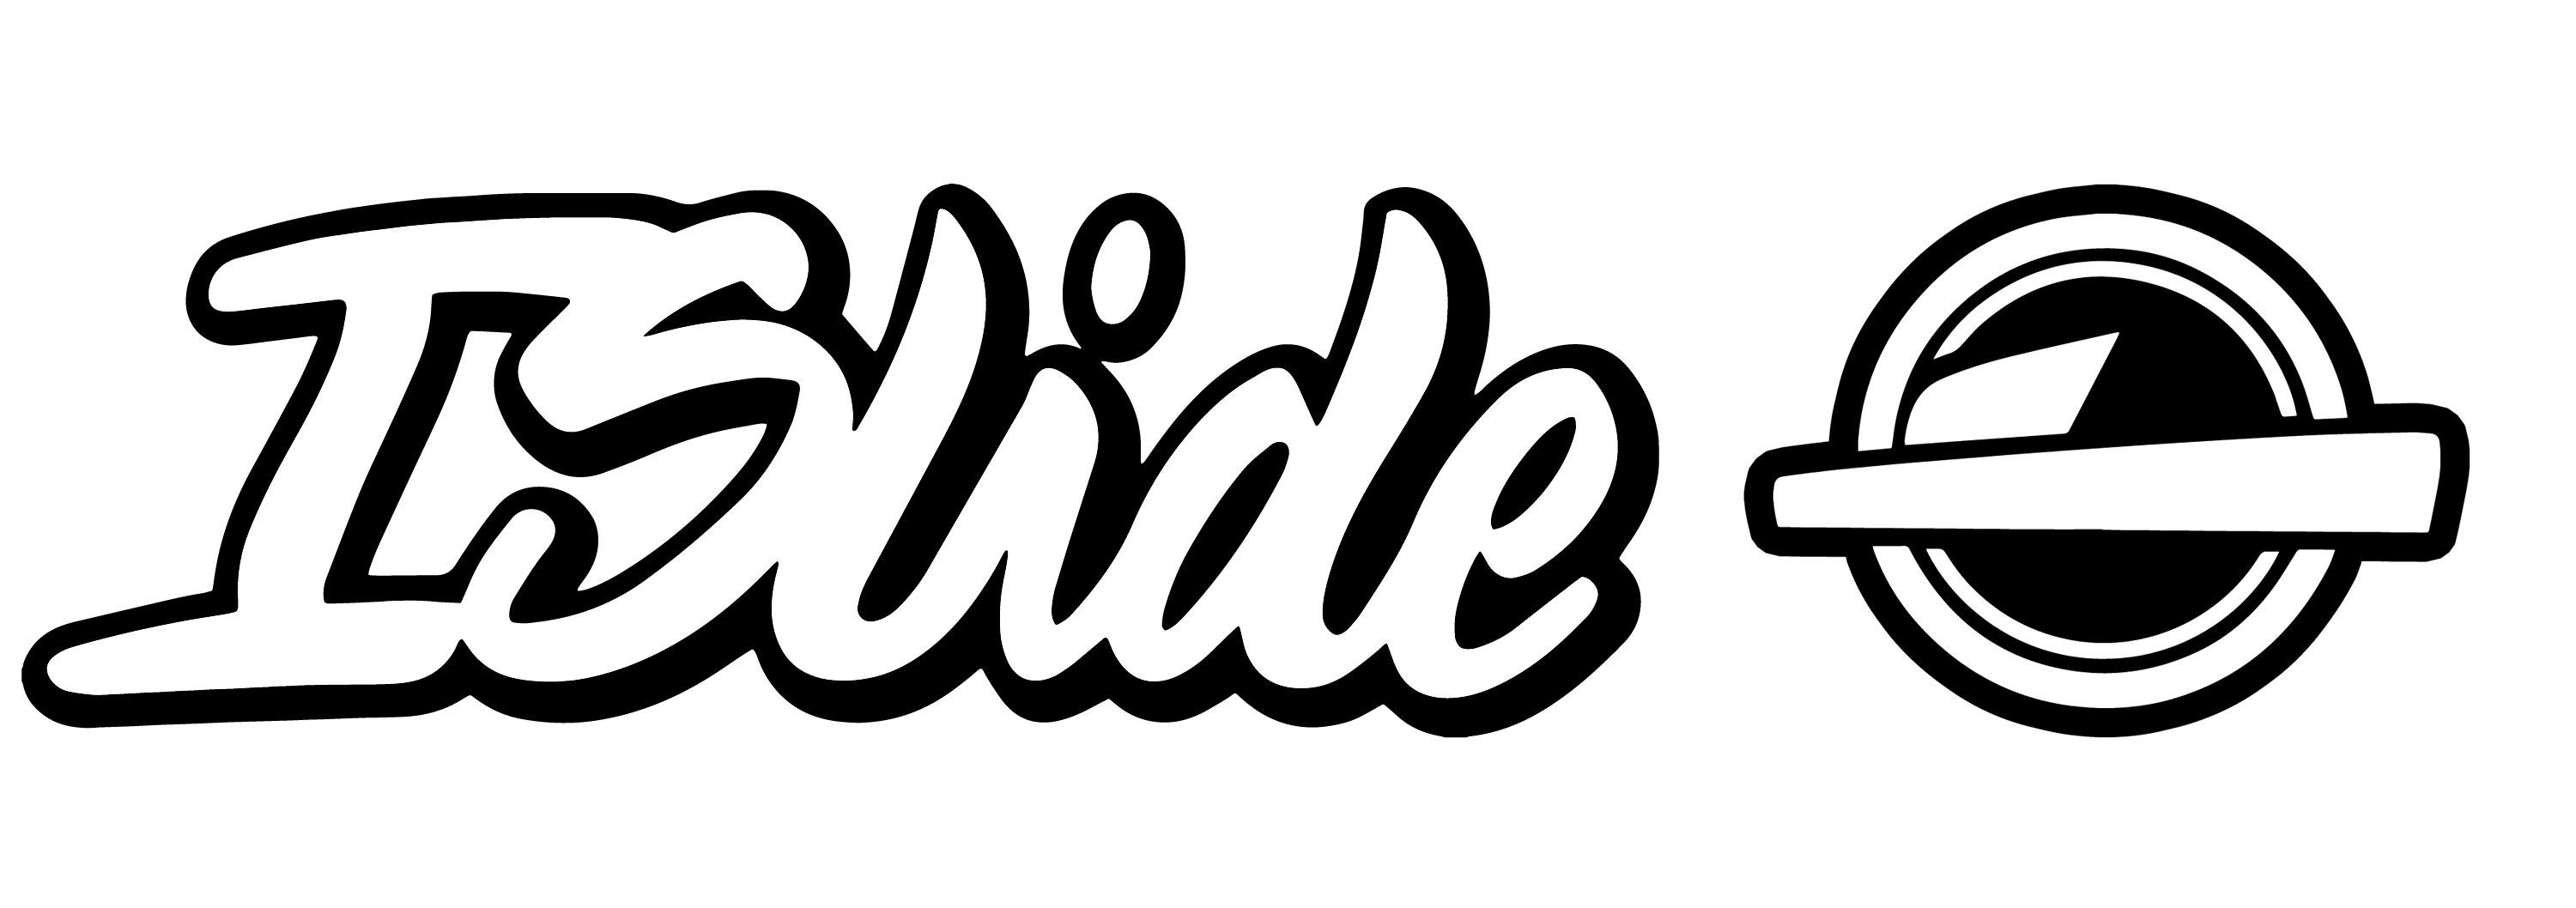 Islides Official Yale Block Y Slides